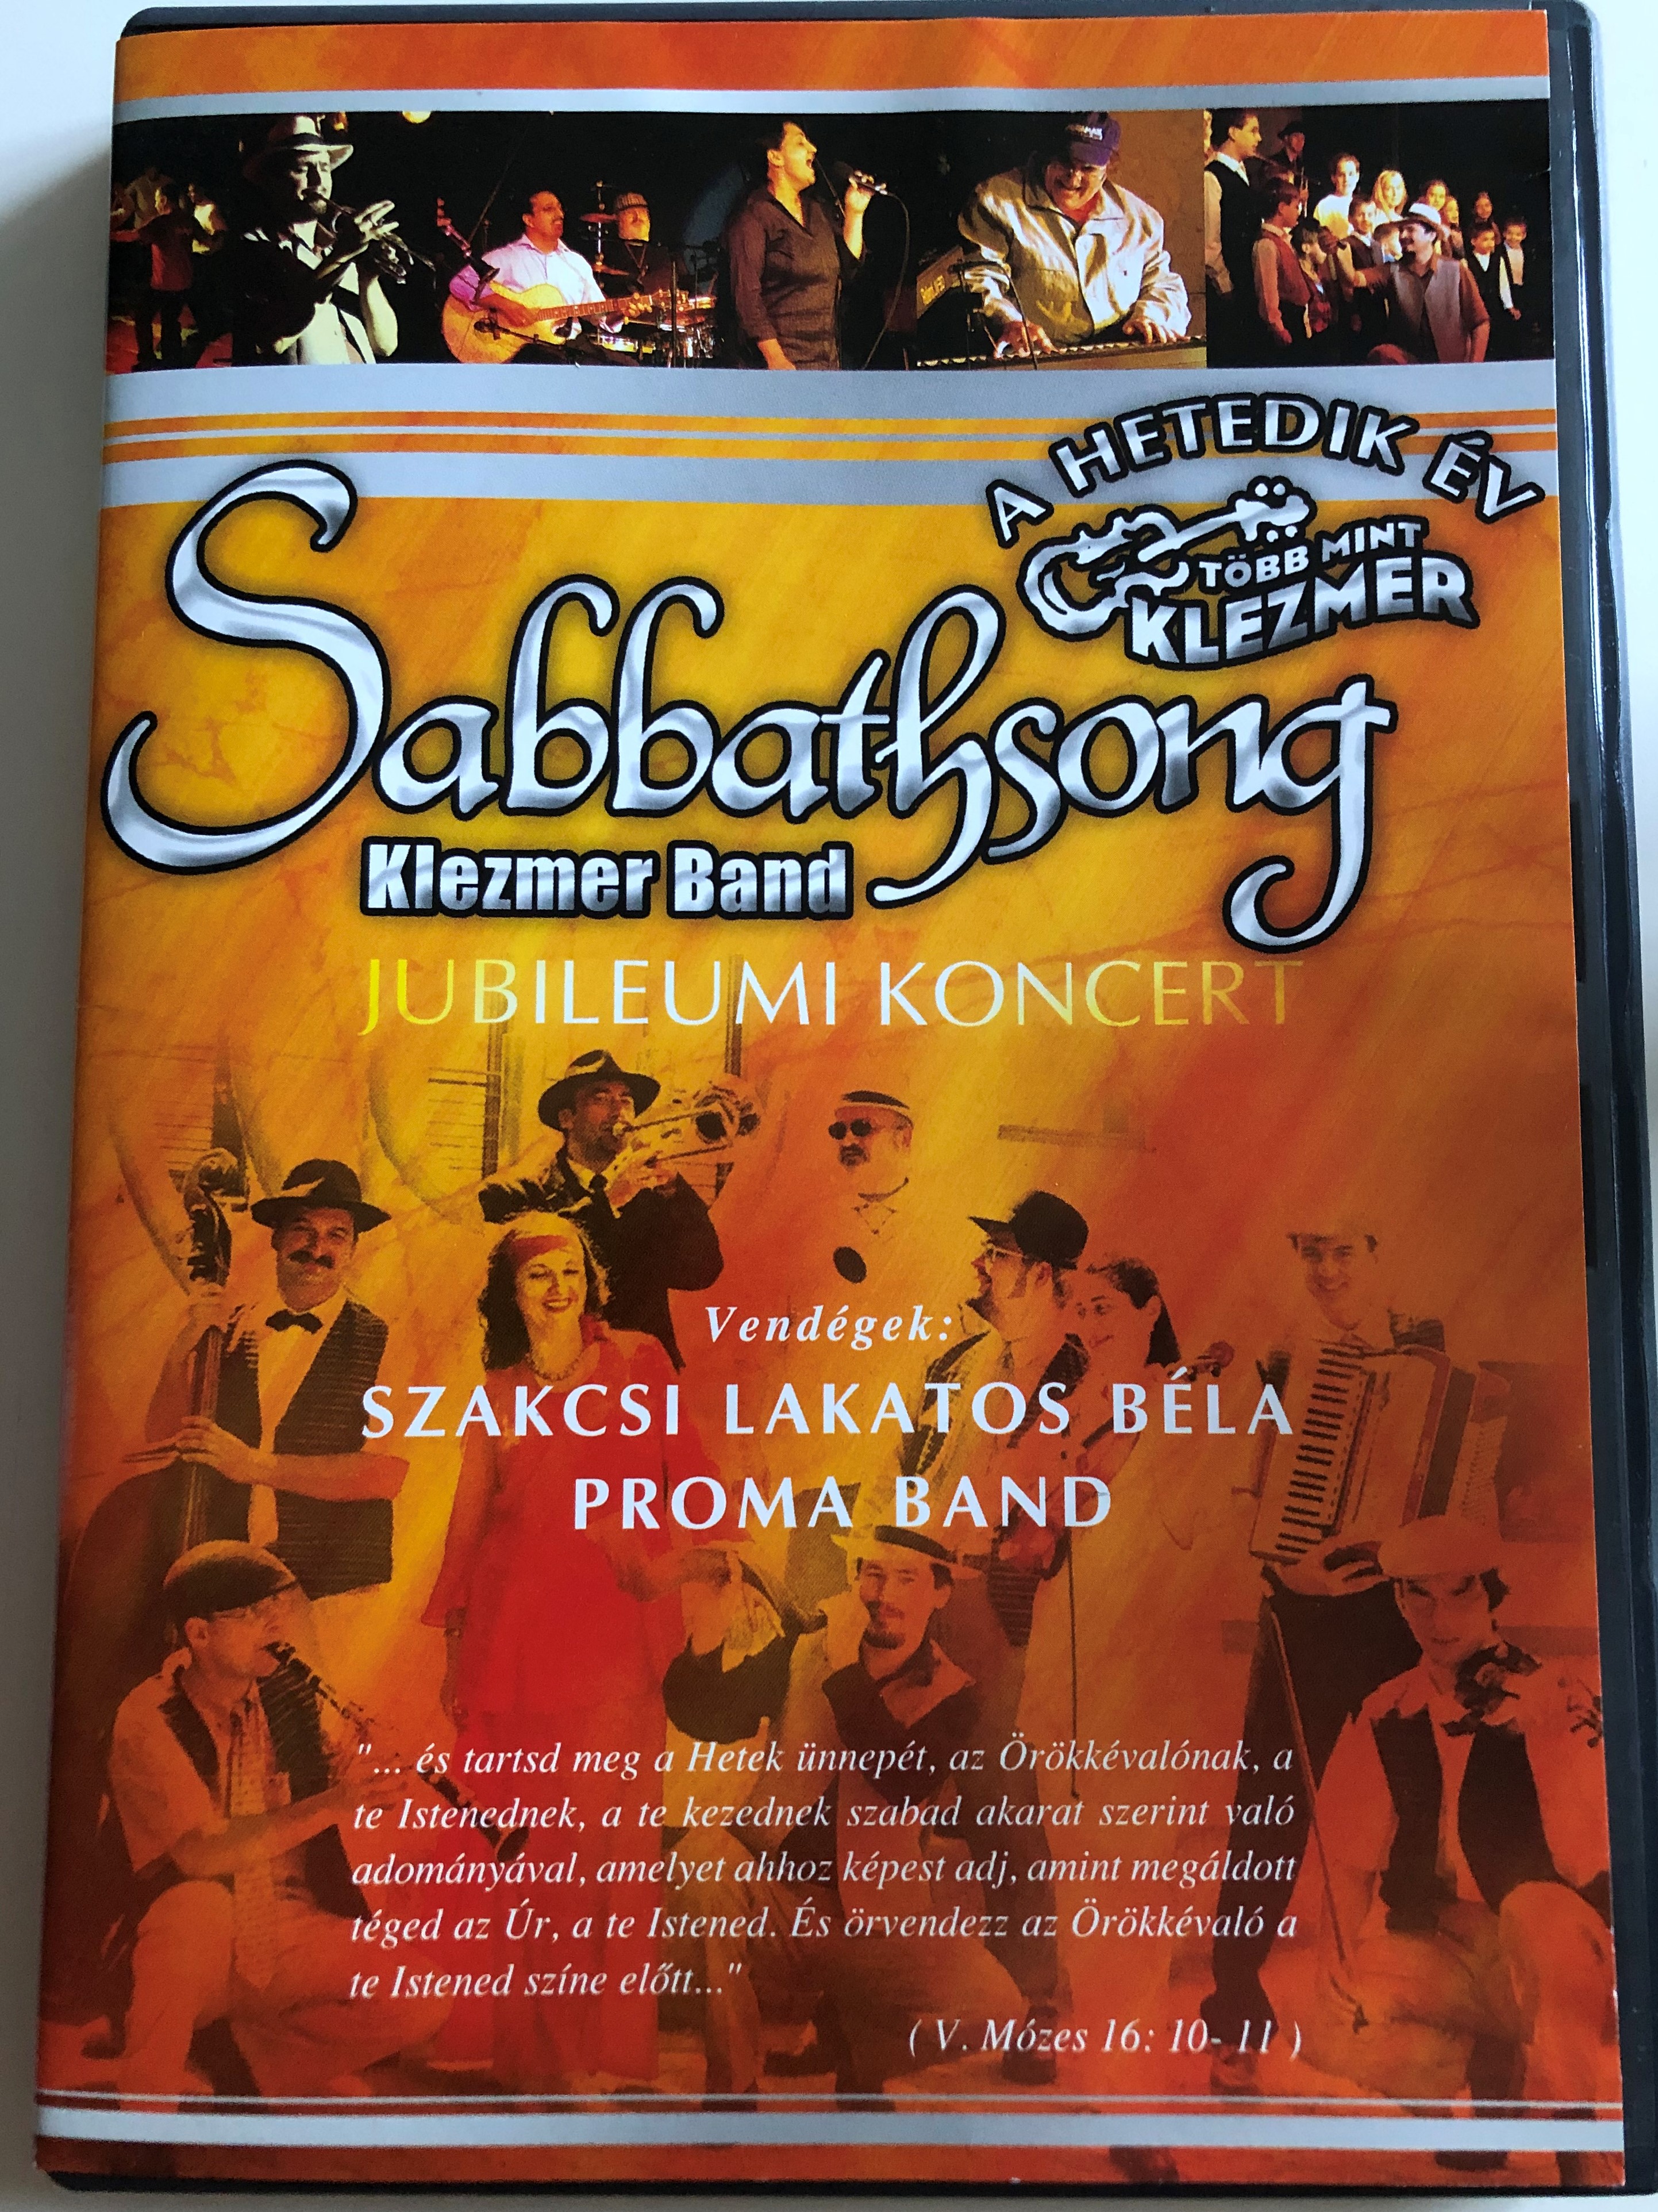 sabbathsong-klezmer-band-jubileumi-koncert-dvd-2005-a-hetedik-v-t-bb-mint-klezmer-guests-szakcsi-lakatos-b-la-proma-band-seventh-year-jubilee-concert-1-.jpg